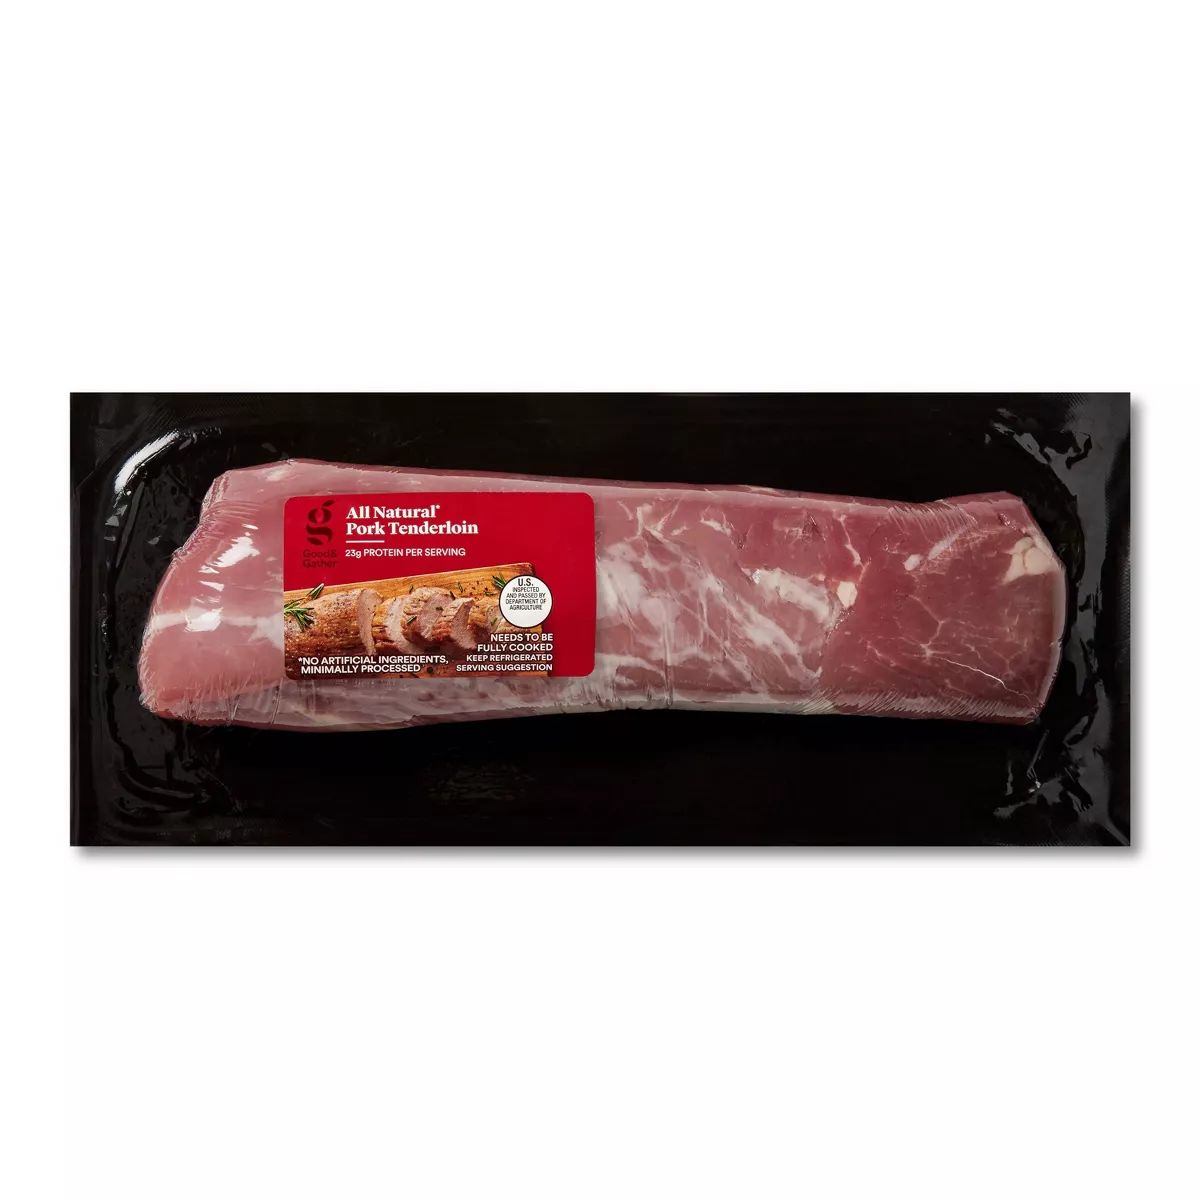 All Natural Pork Tenderloin - price per lb - Good & Gather™ | Target